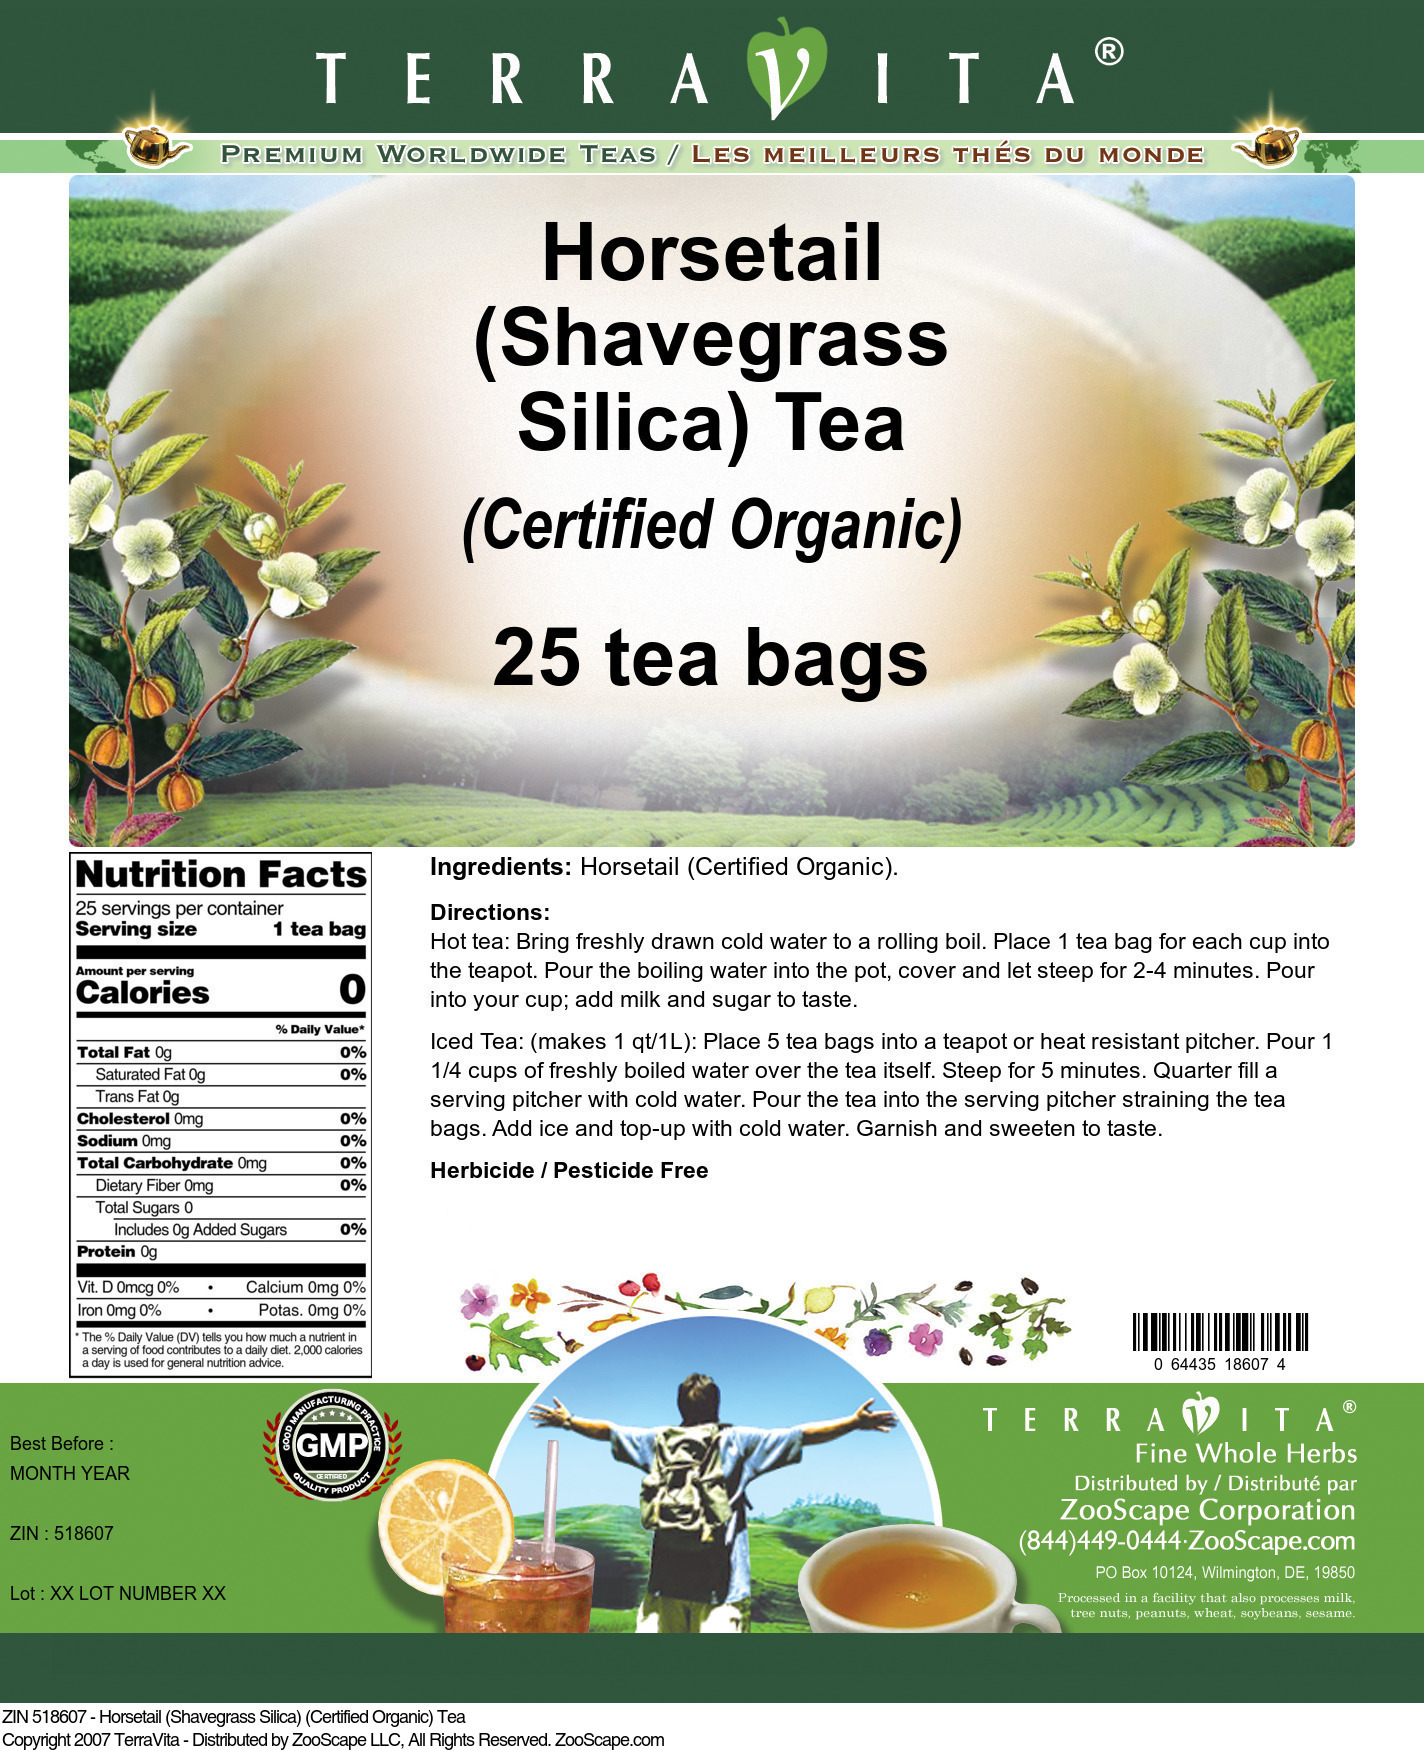 Horsetail (Shavegrass Silica) (Certified Organic) Tea - Label